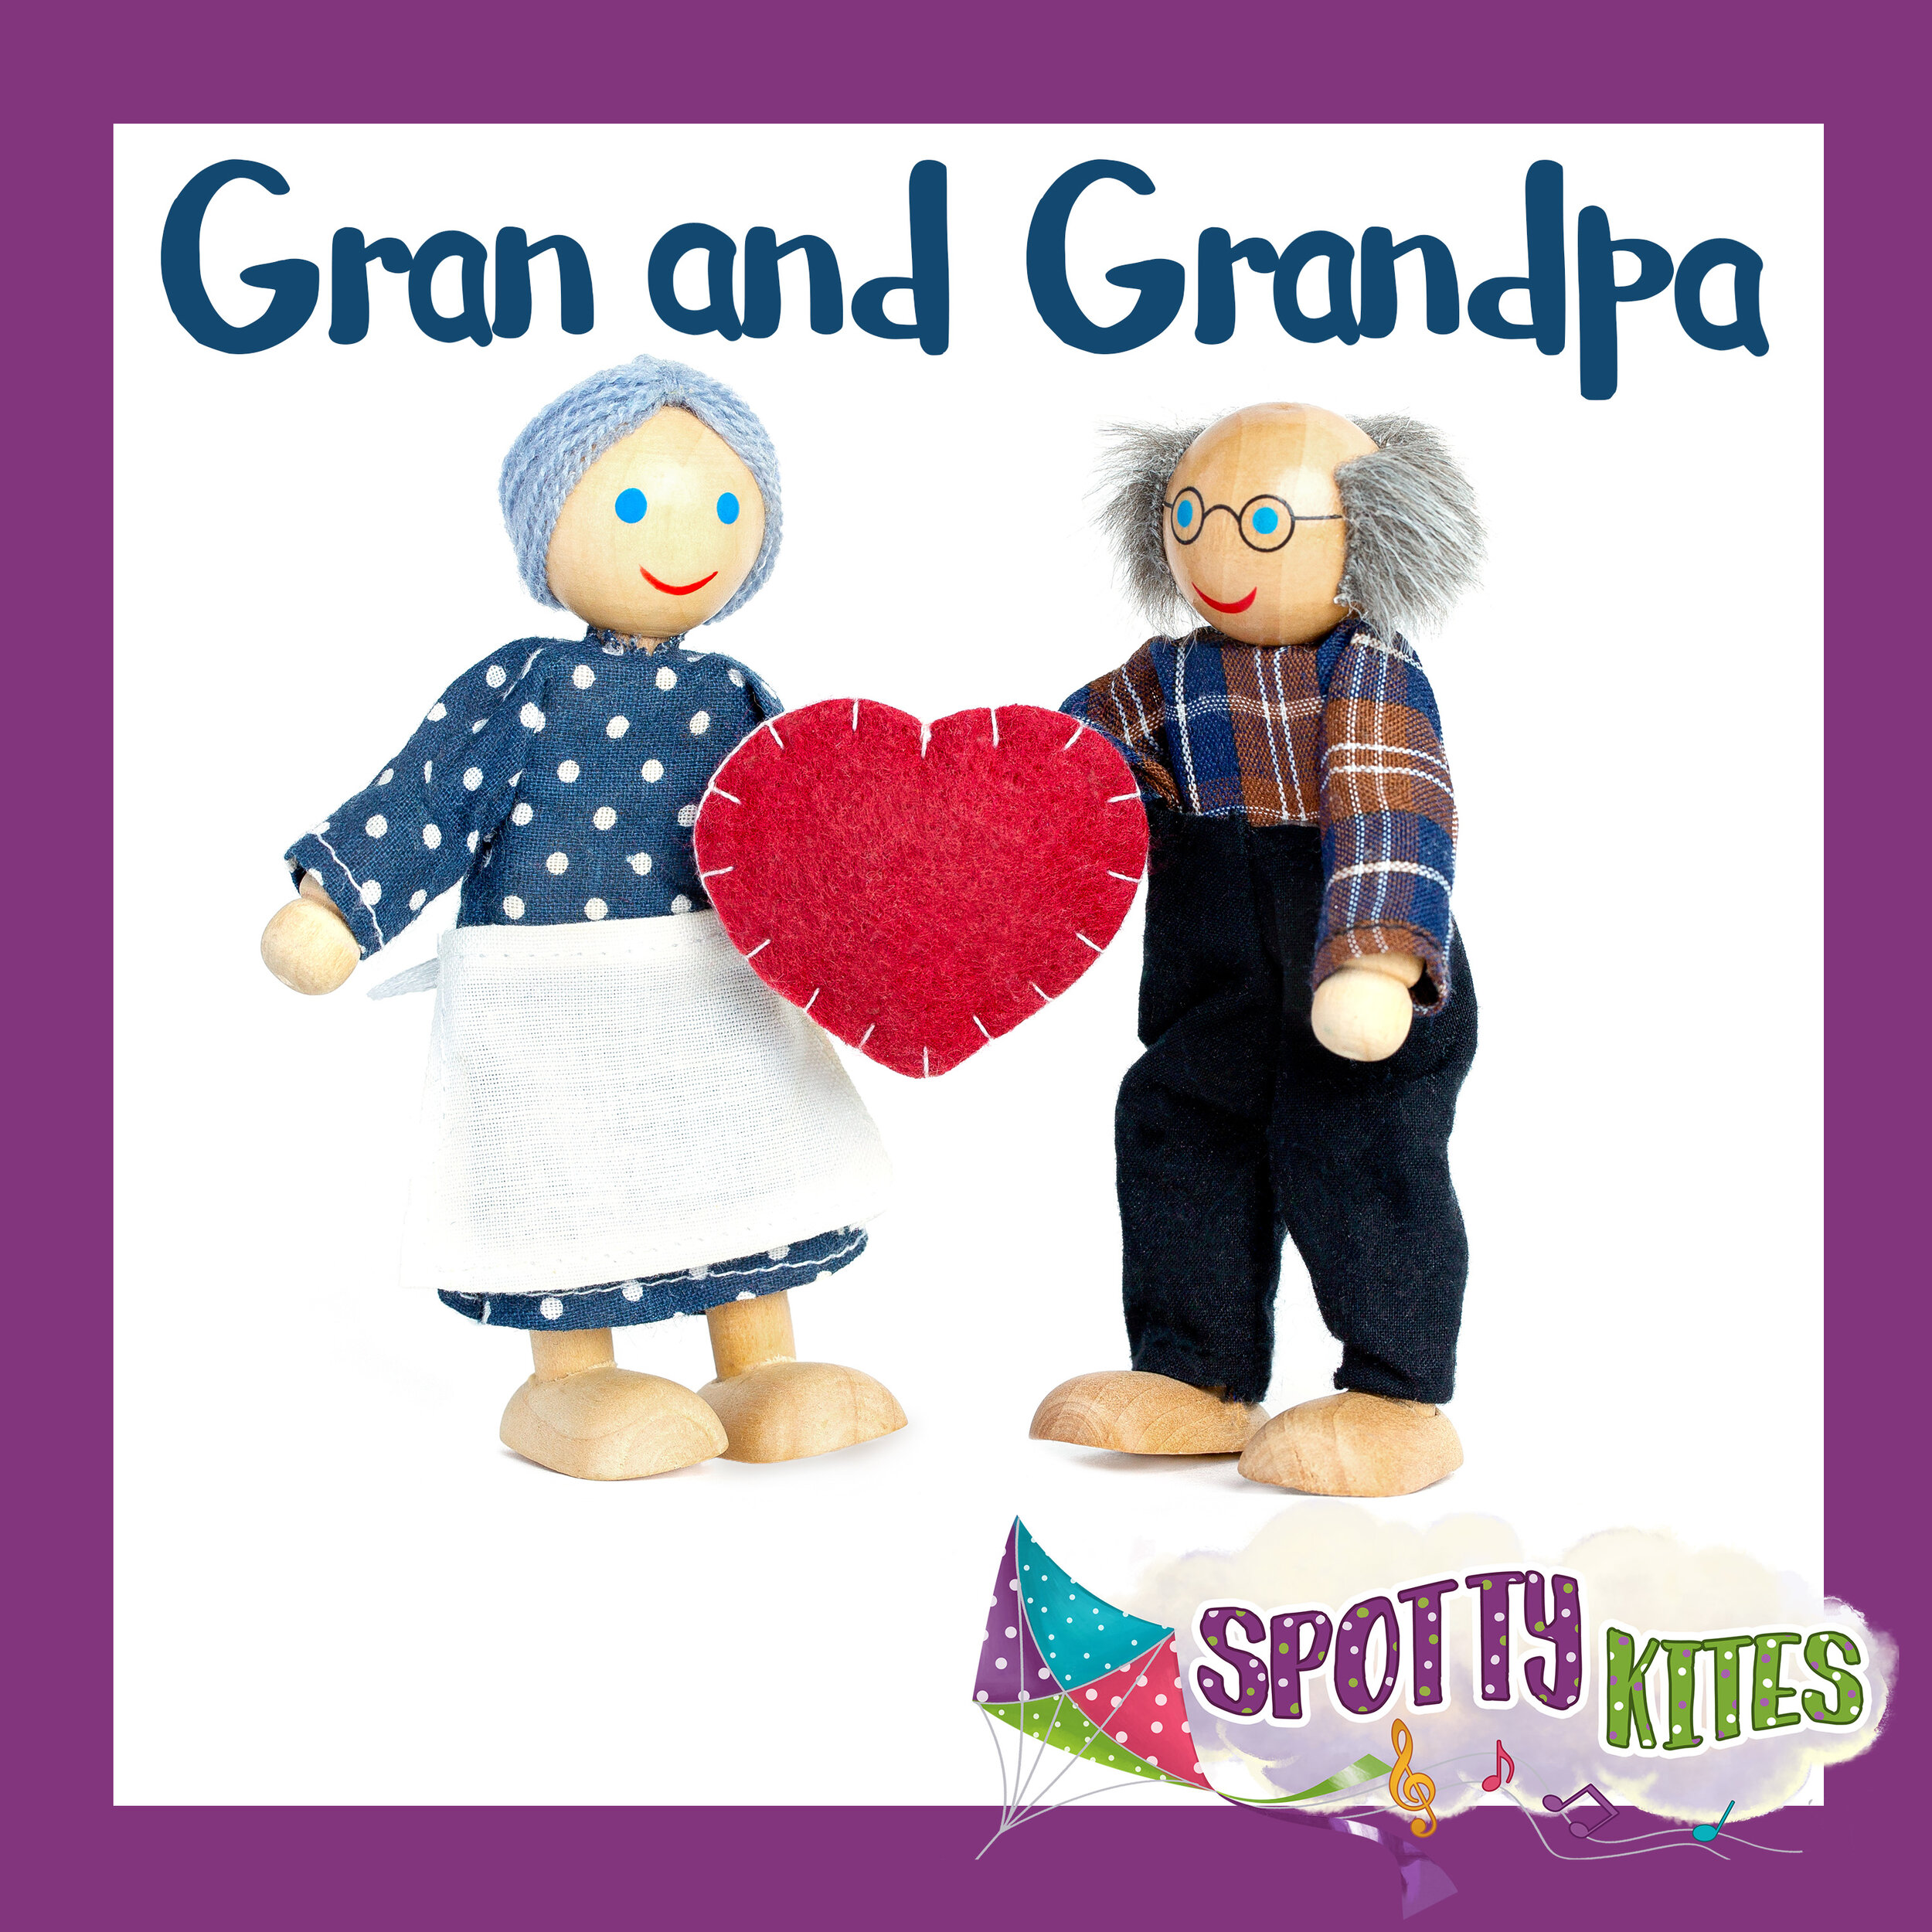 Spotty Kites Gran and Grandpa.jpg